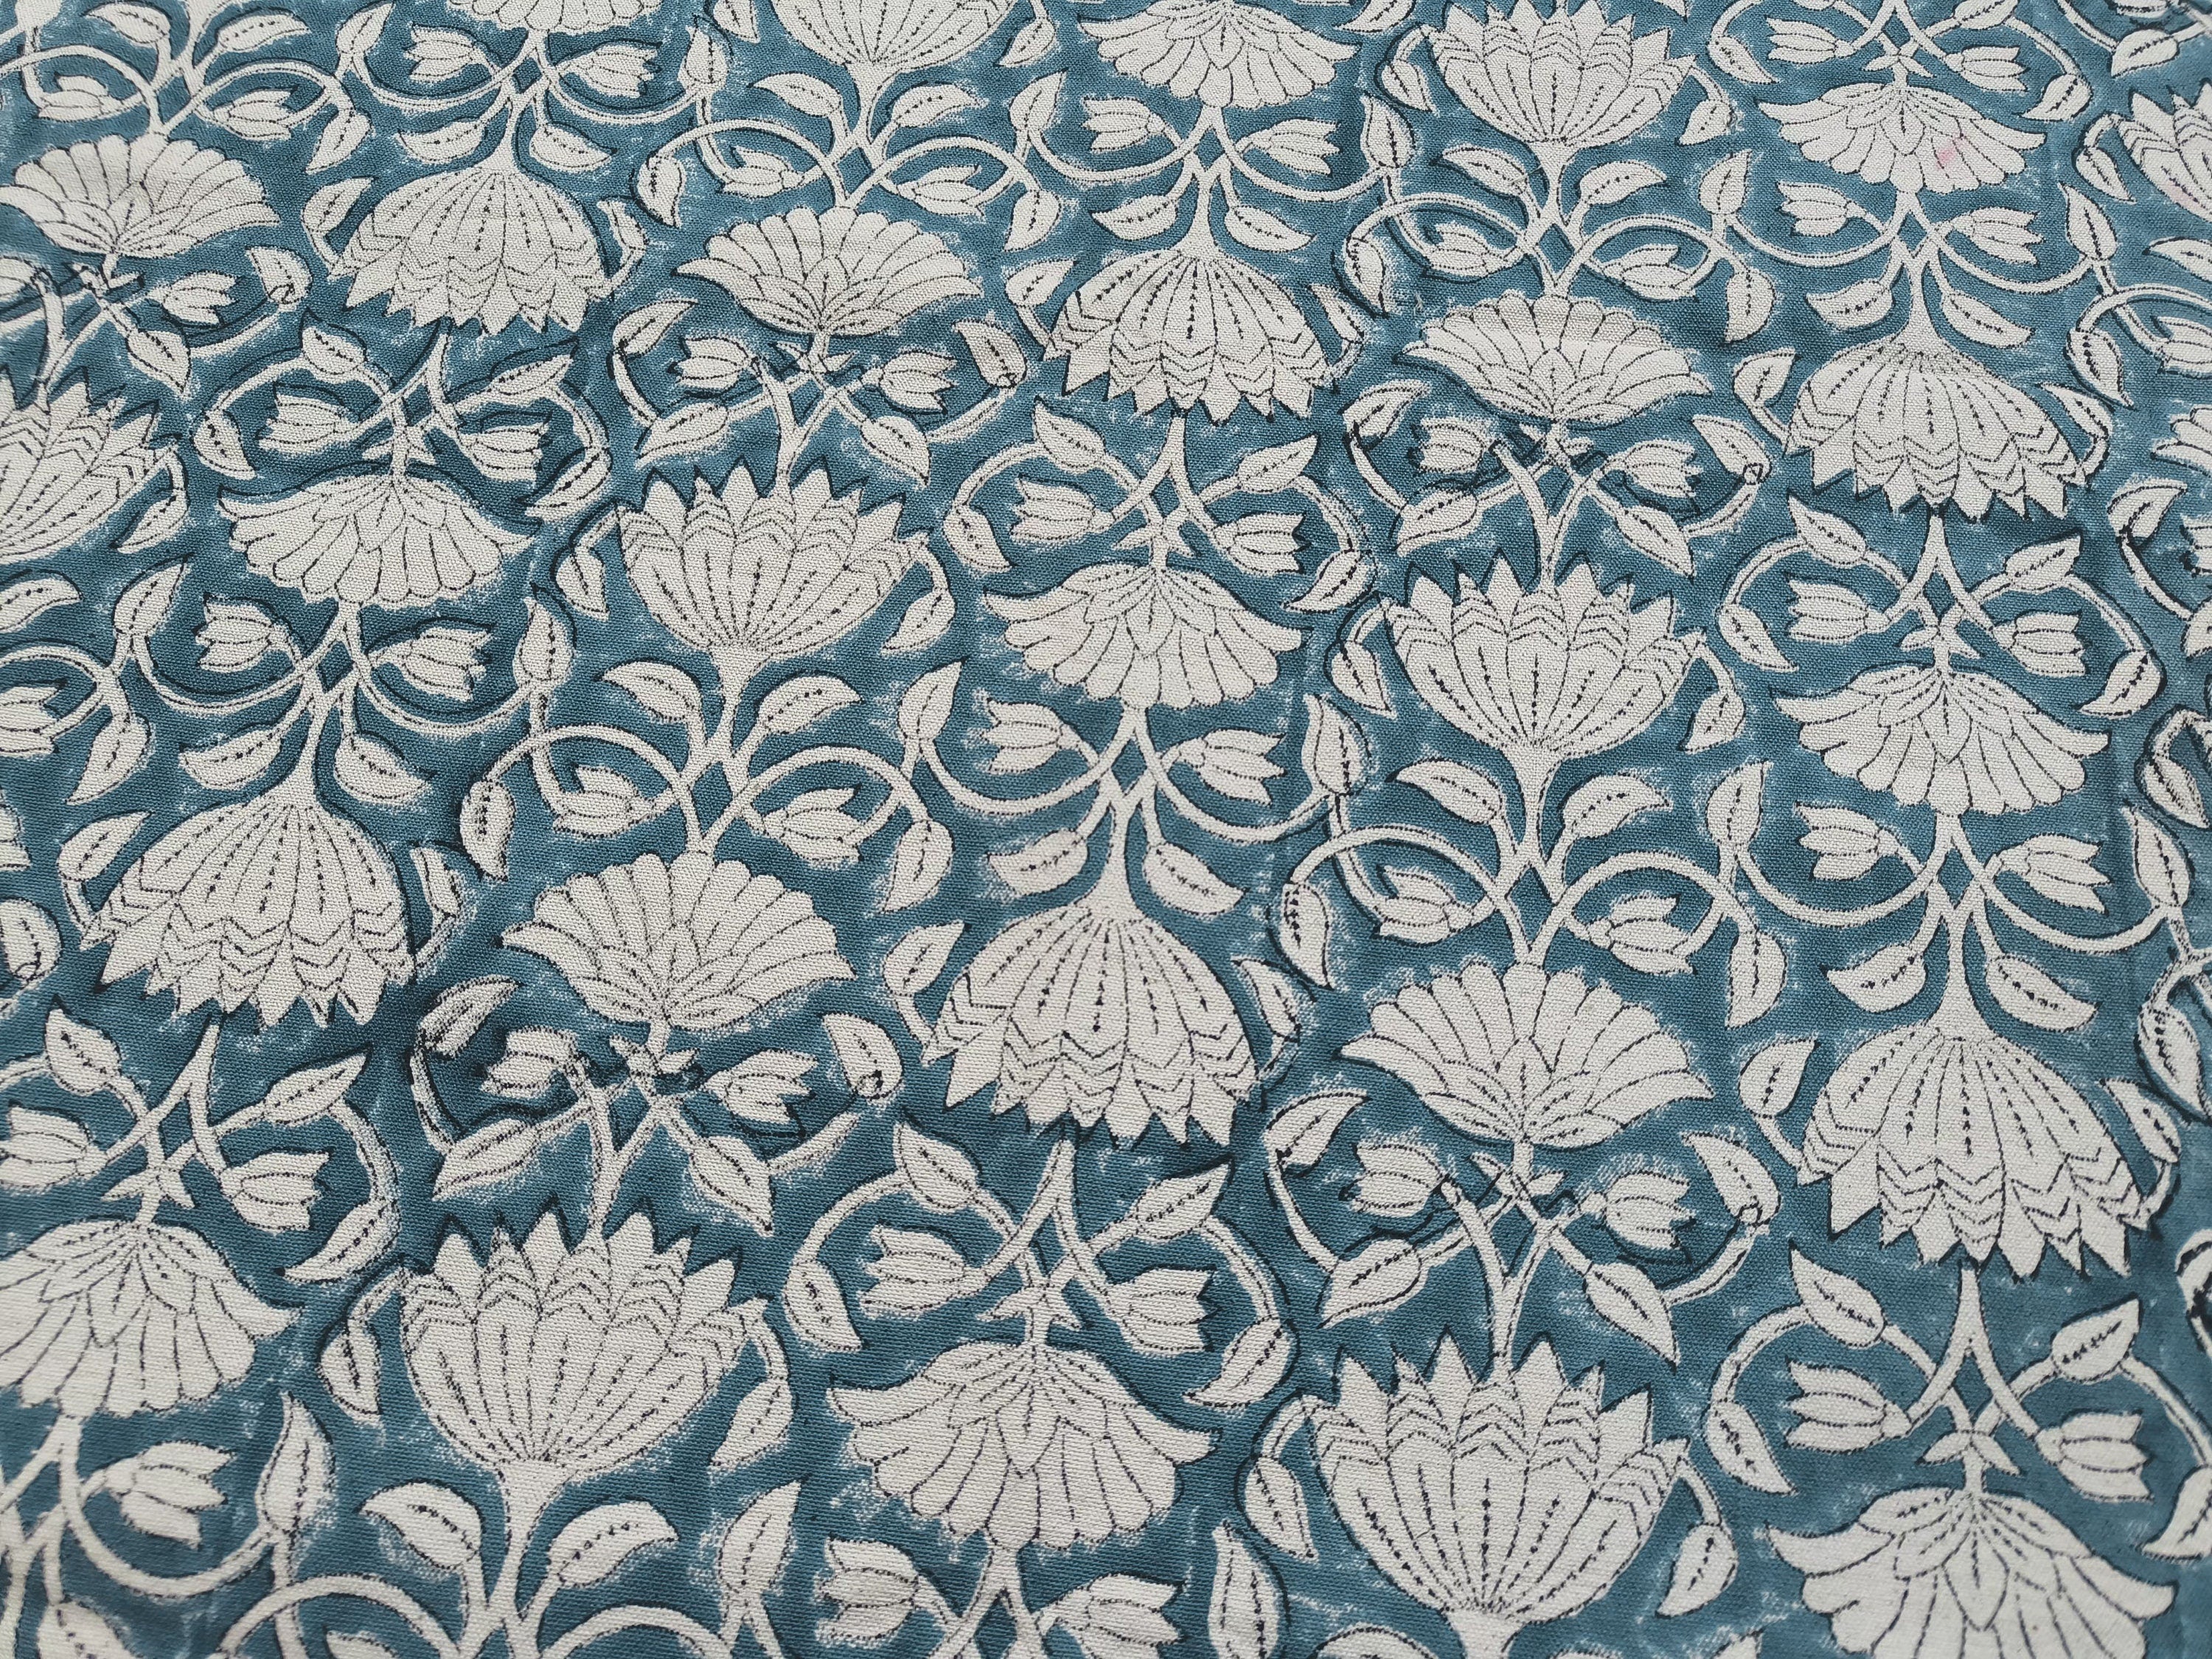 Block Print Linen Fabric, Ulta Kamal  "Indian Linen: Floral Hand Block Print, Handloom Natural Fabric For Home Decor,Thick Linen Fabric